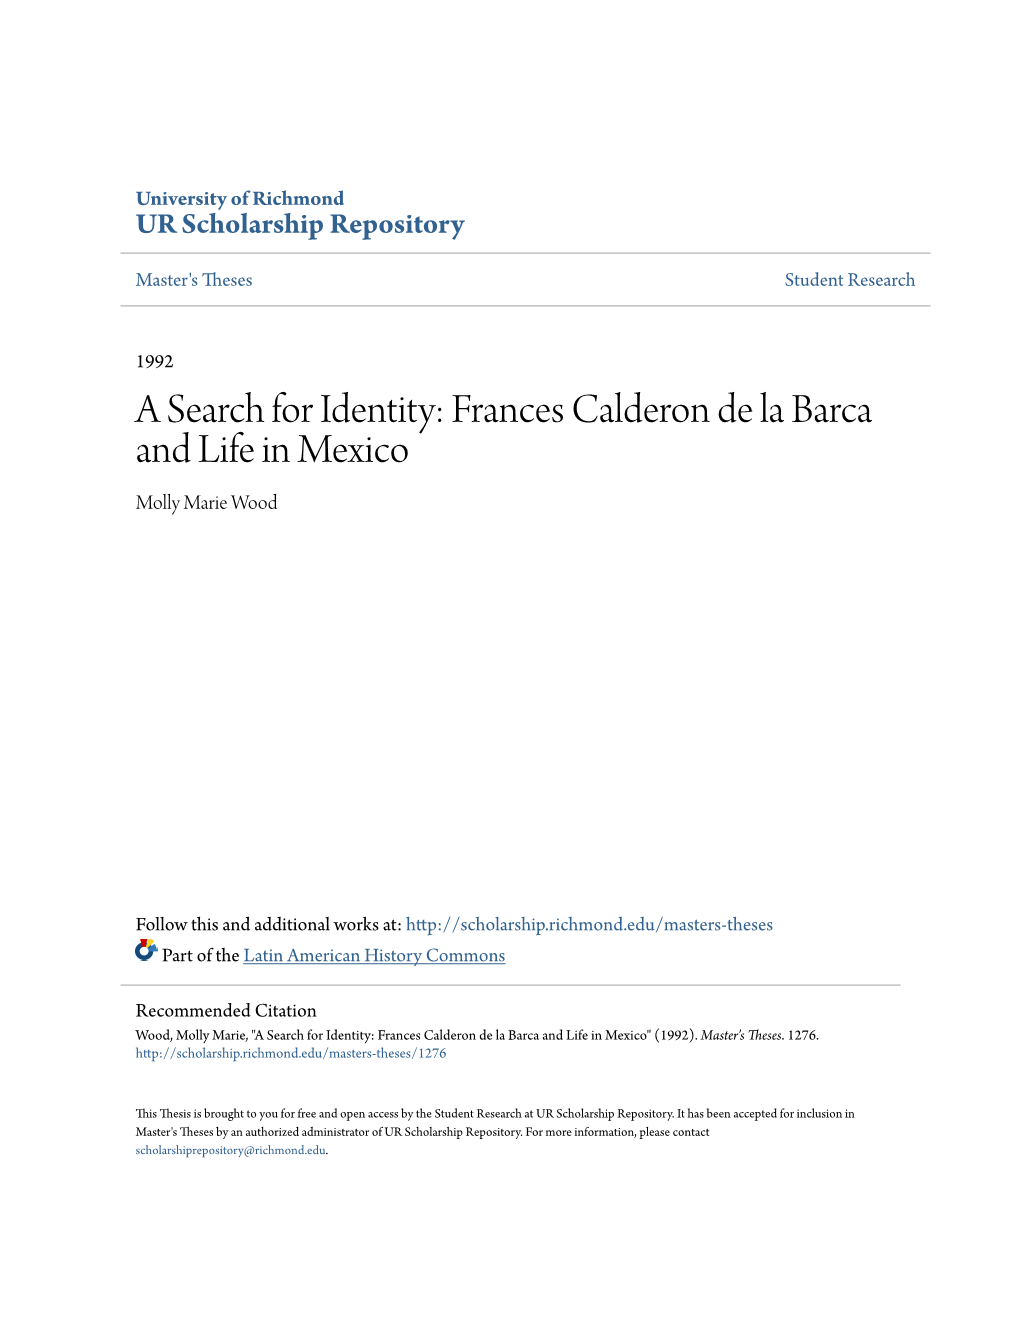 Frances Calderon De La Barca and Life in Mexico Molly Marie Wood